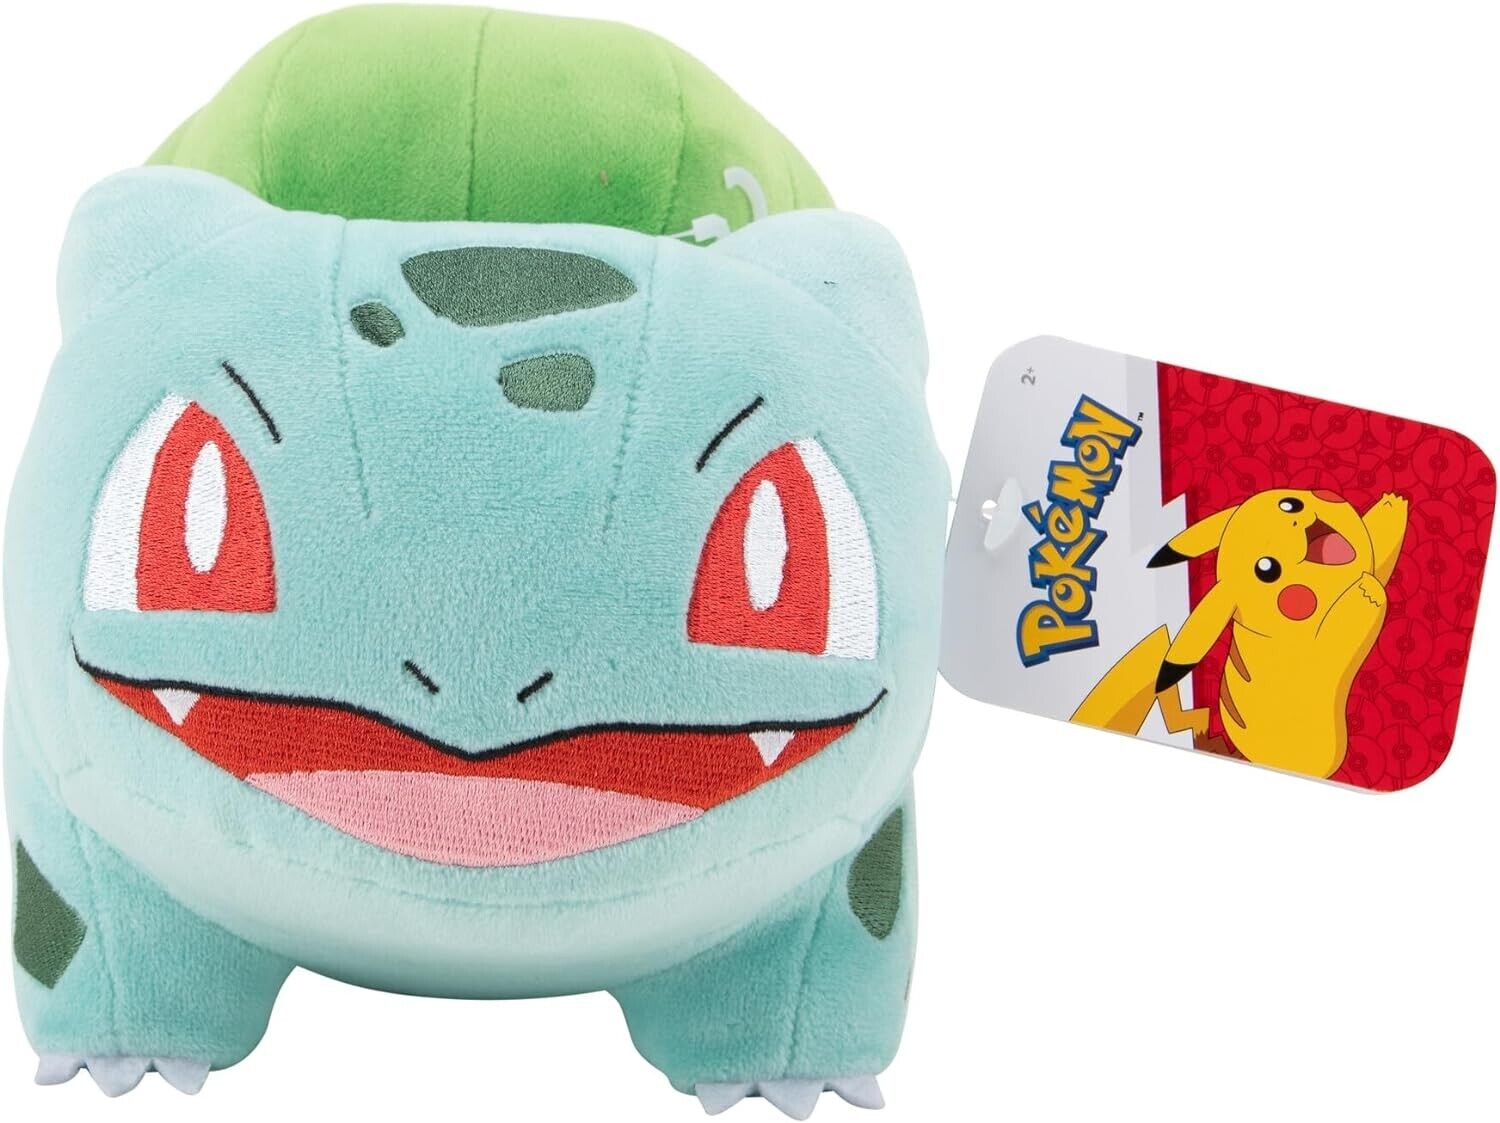 Pokémon Official & Premium Quality 8-inch Bulbasaur Adorable, Ultra-Soft, Plush